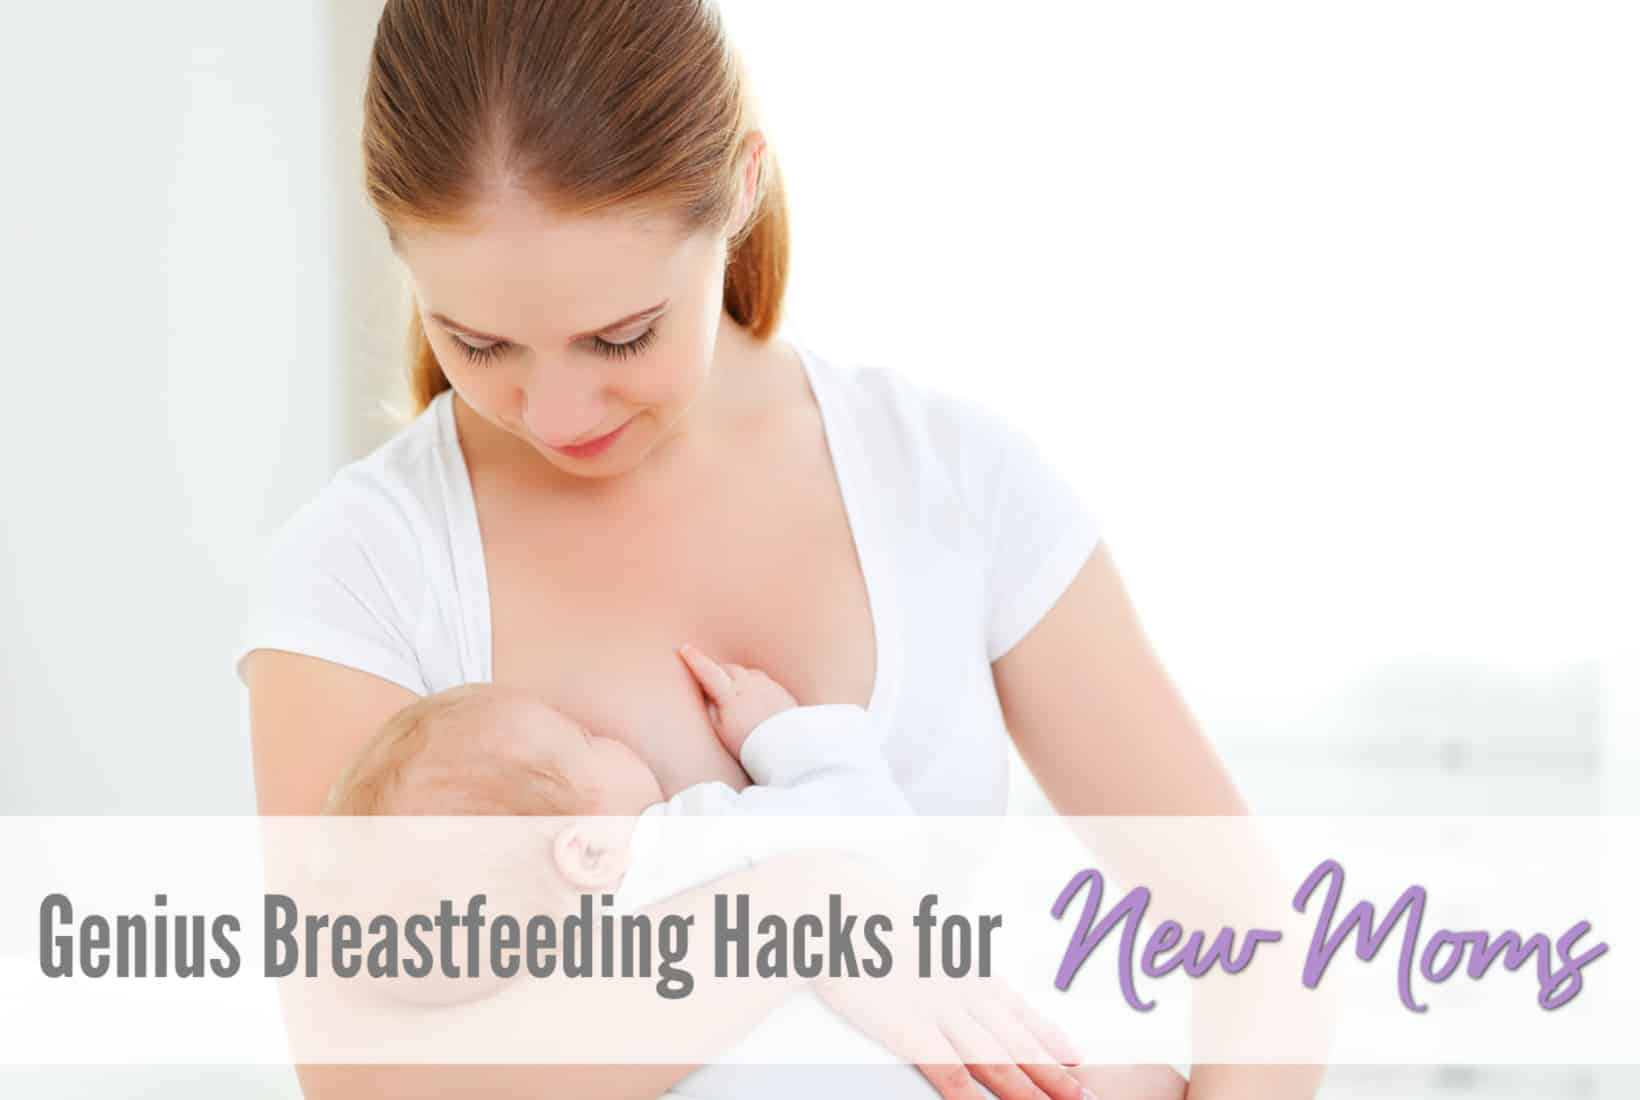 https://www.seemamago.com/wp-content/uploads/2019/08/BreastfeedingFeature.jpg